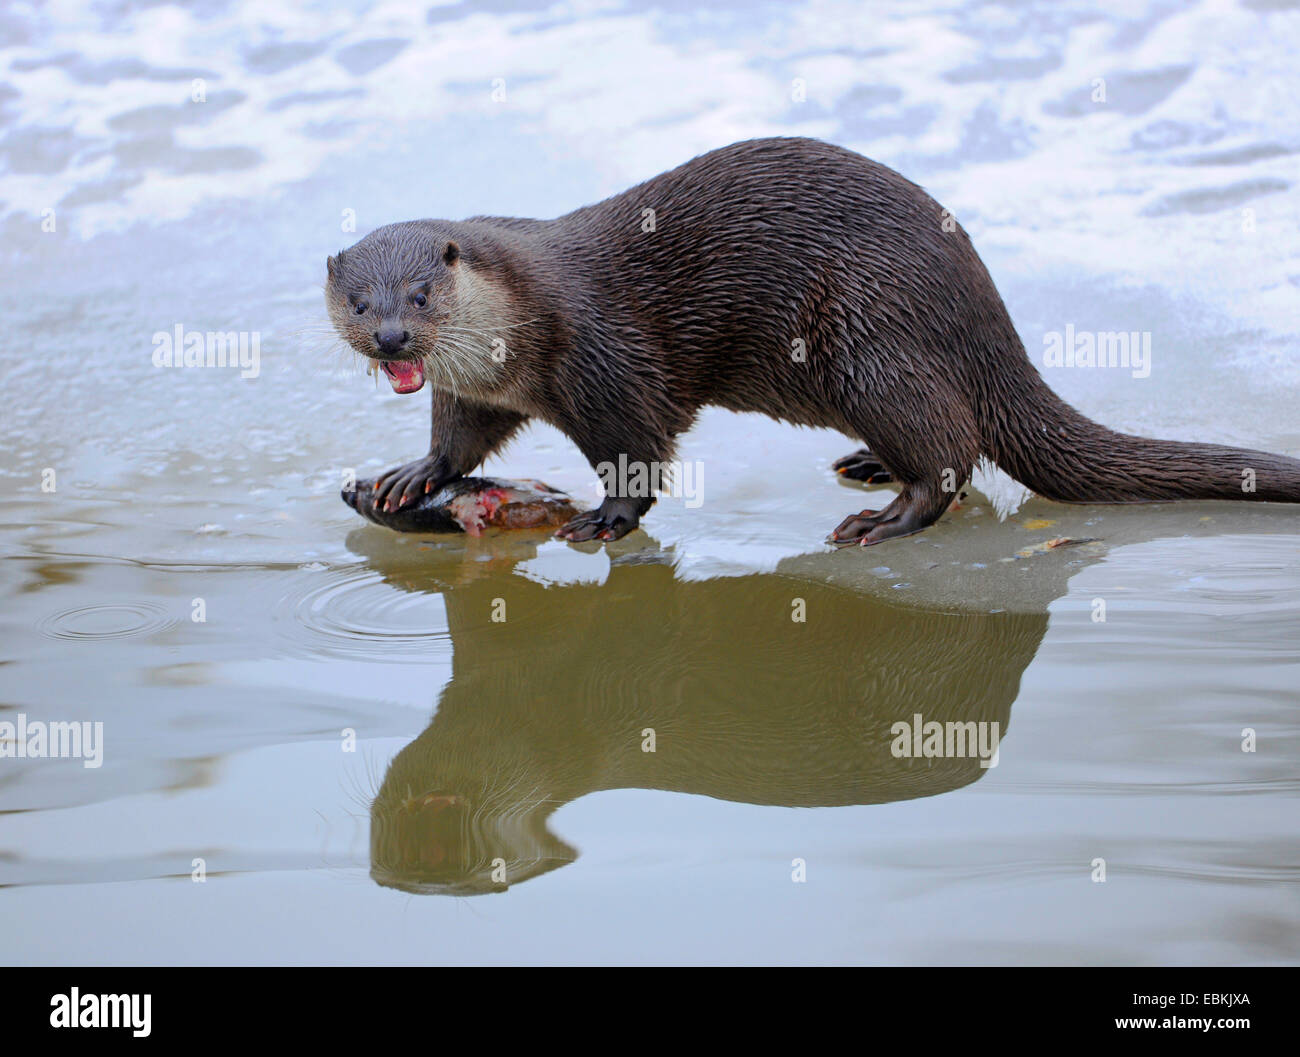 European river otter, European Otter, Eurasian Otter (Lutra lutra), eating a fish on ice, Germany Stock Photo